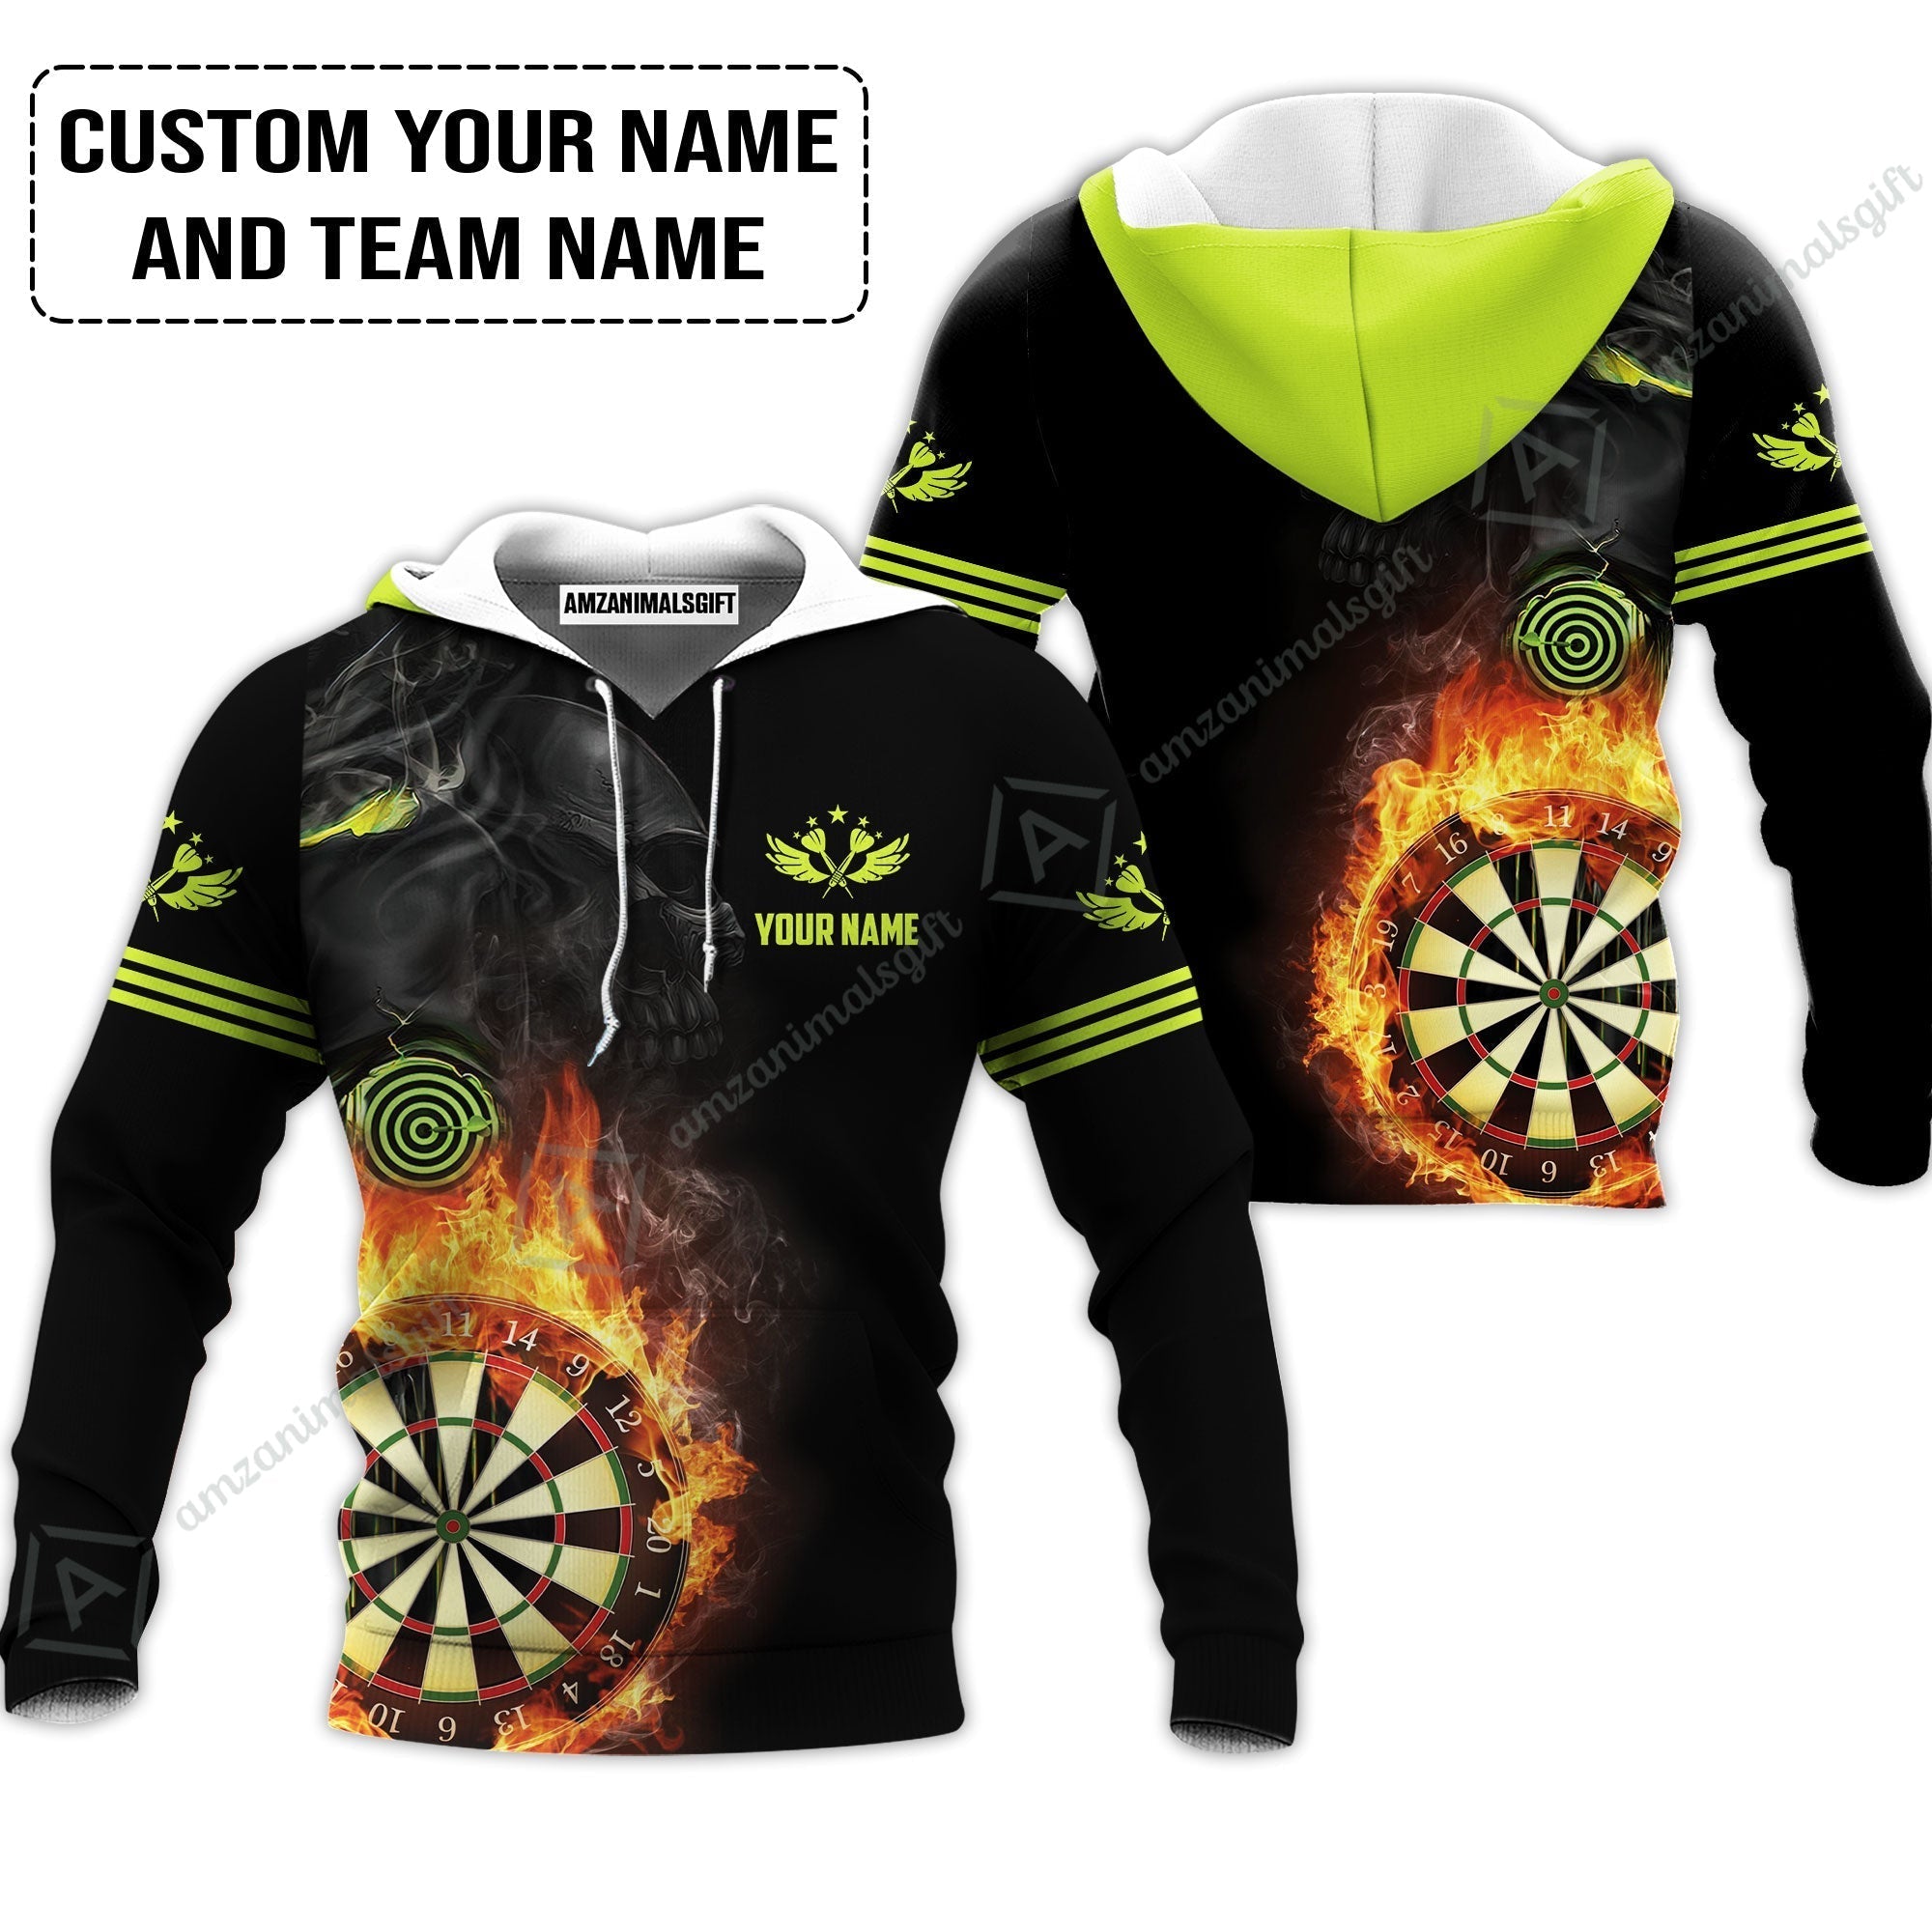 Customized Name & Team Darts Hoodie, Skull Darts Flame Personalized Darts Hoodie